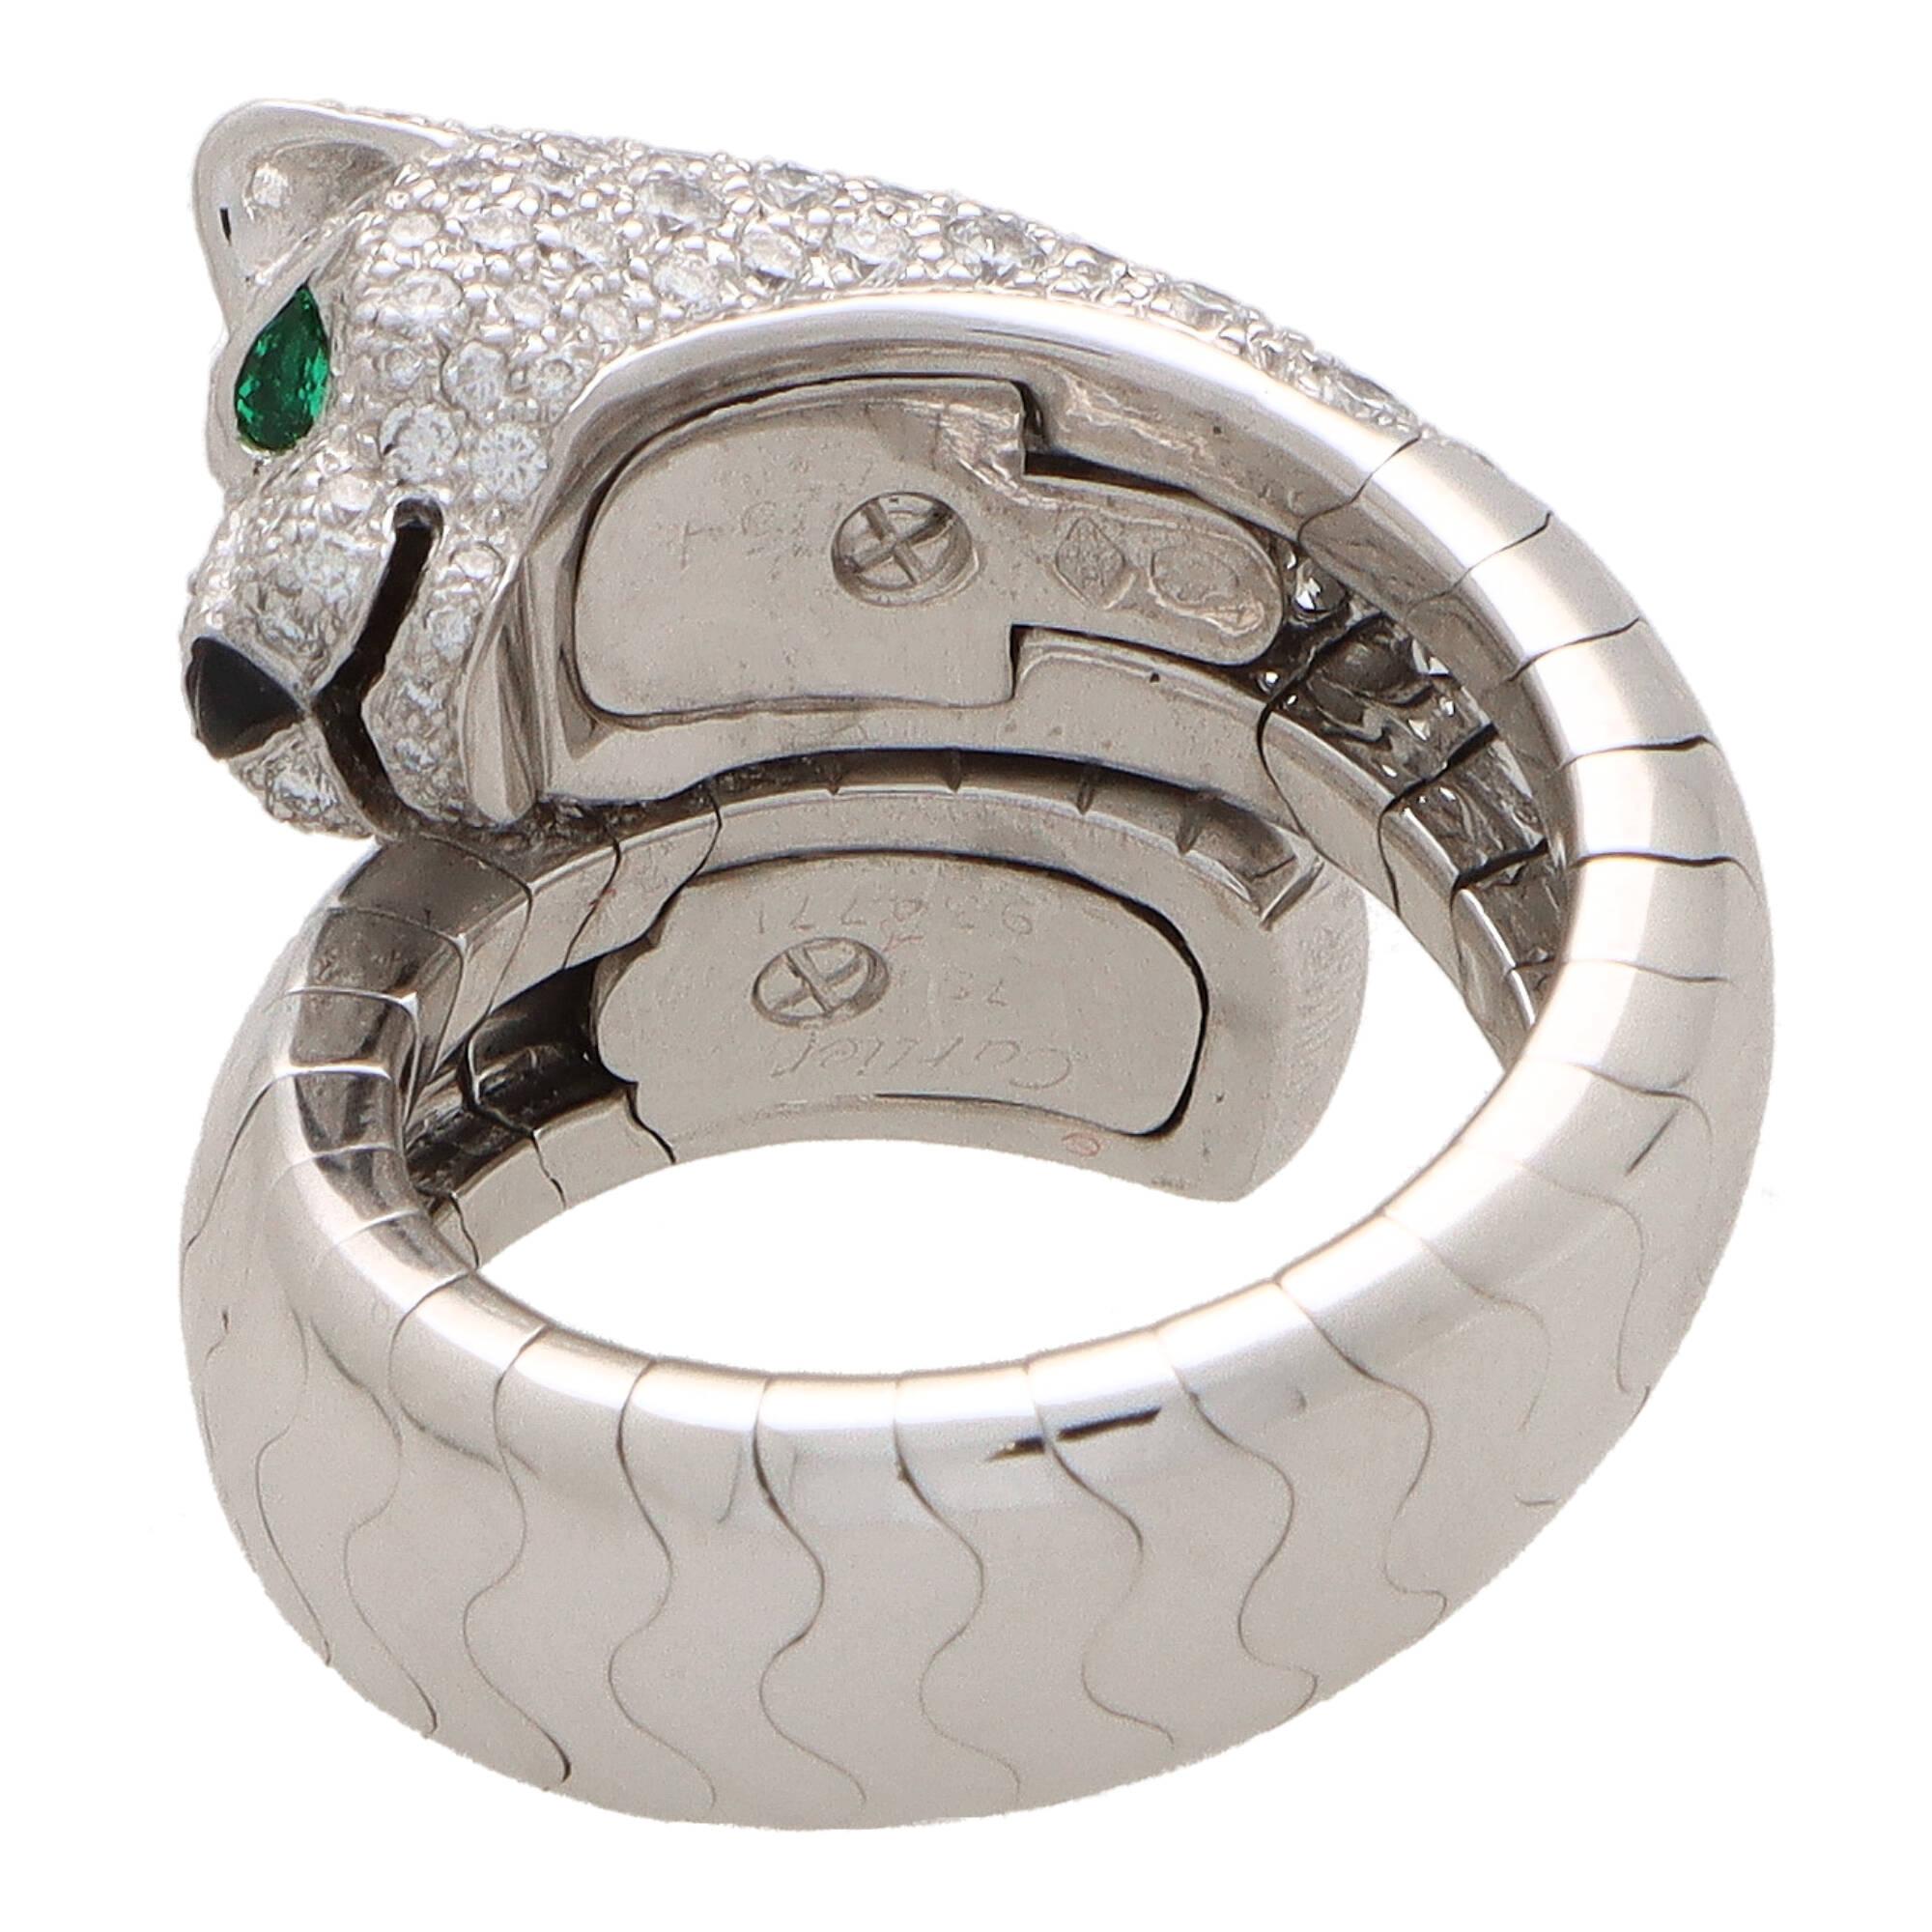 CRN4224900 - Panthère de Cartier ring - White gold, diamonds, emeralds,  onyx - Cartier